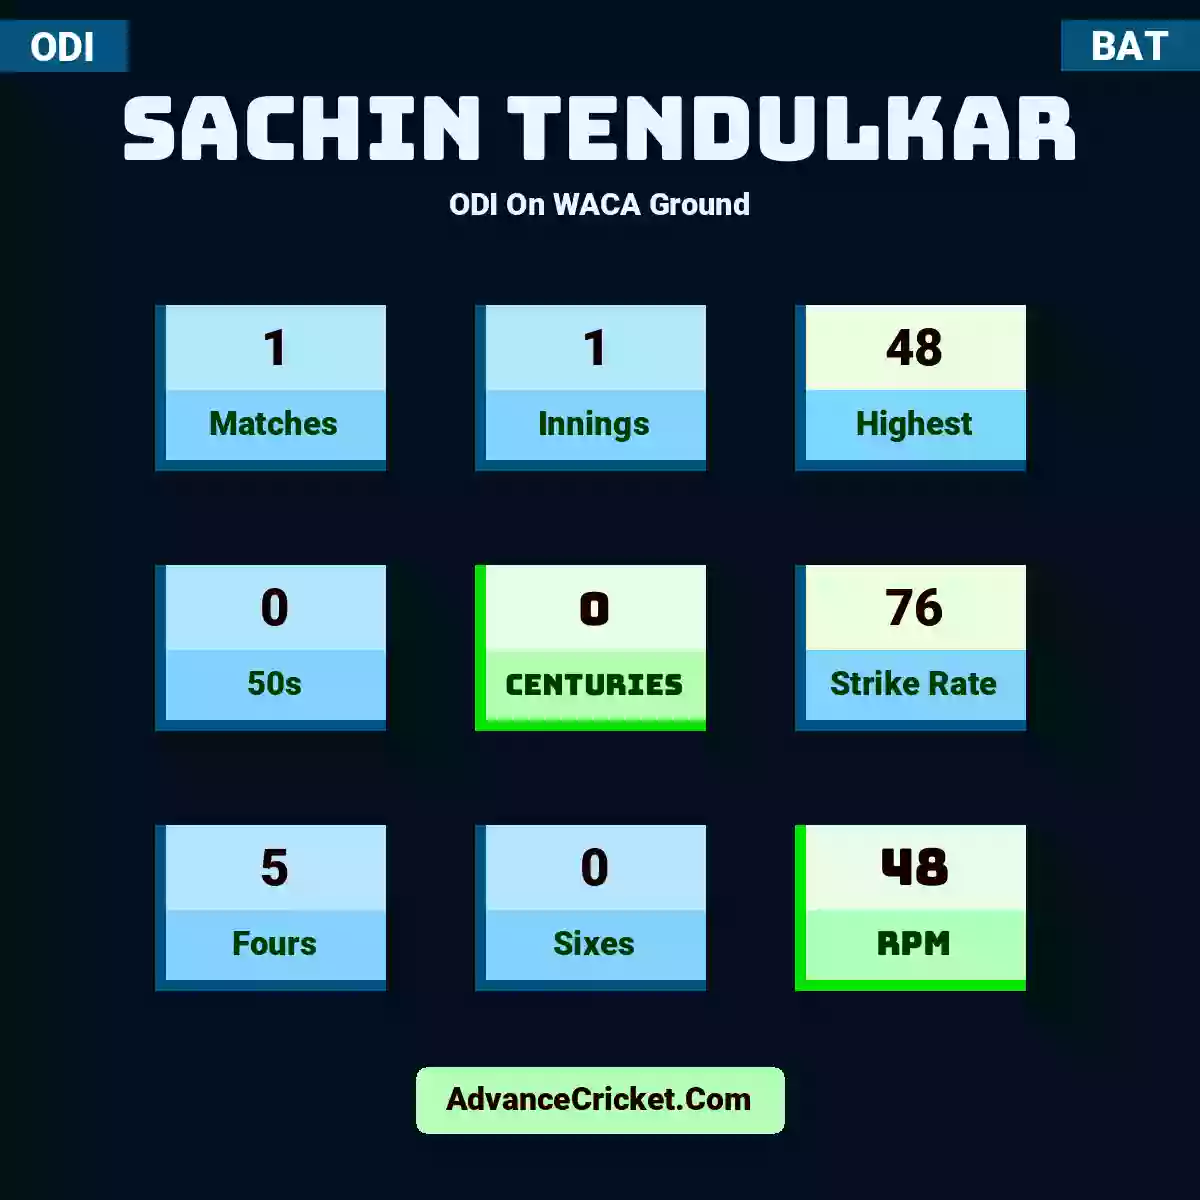 Sachin Tendulkar ODI  On WACA Ground, Sachin Tendulkar played 1 matches, scored 48 runs as highest, 0 half-centuries, and 0 centuries, with a strike rate of 76. S.Tendulkar hit 5 fours and 0 sixes, with an RPM of 48.